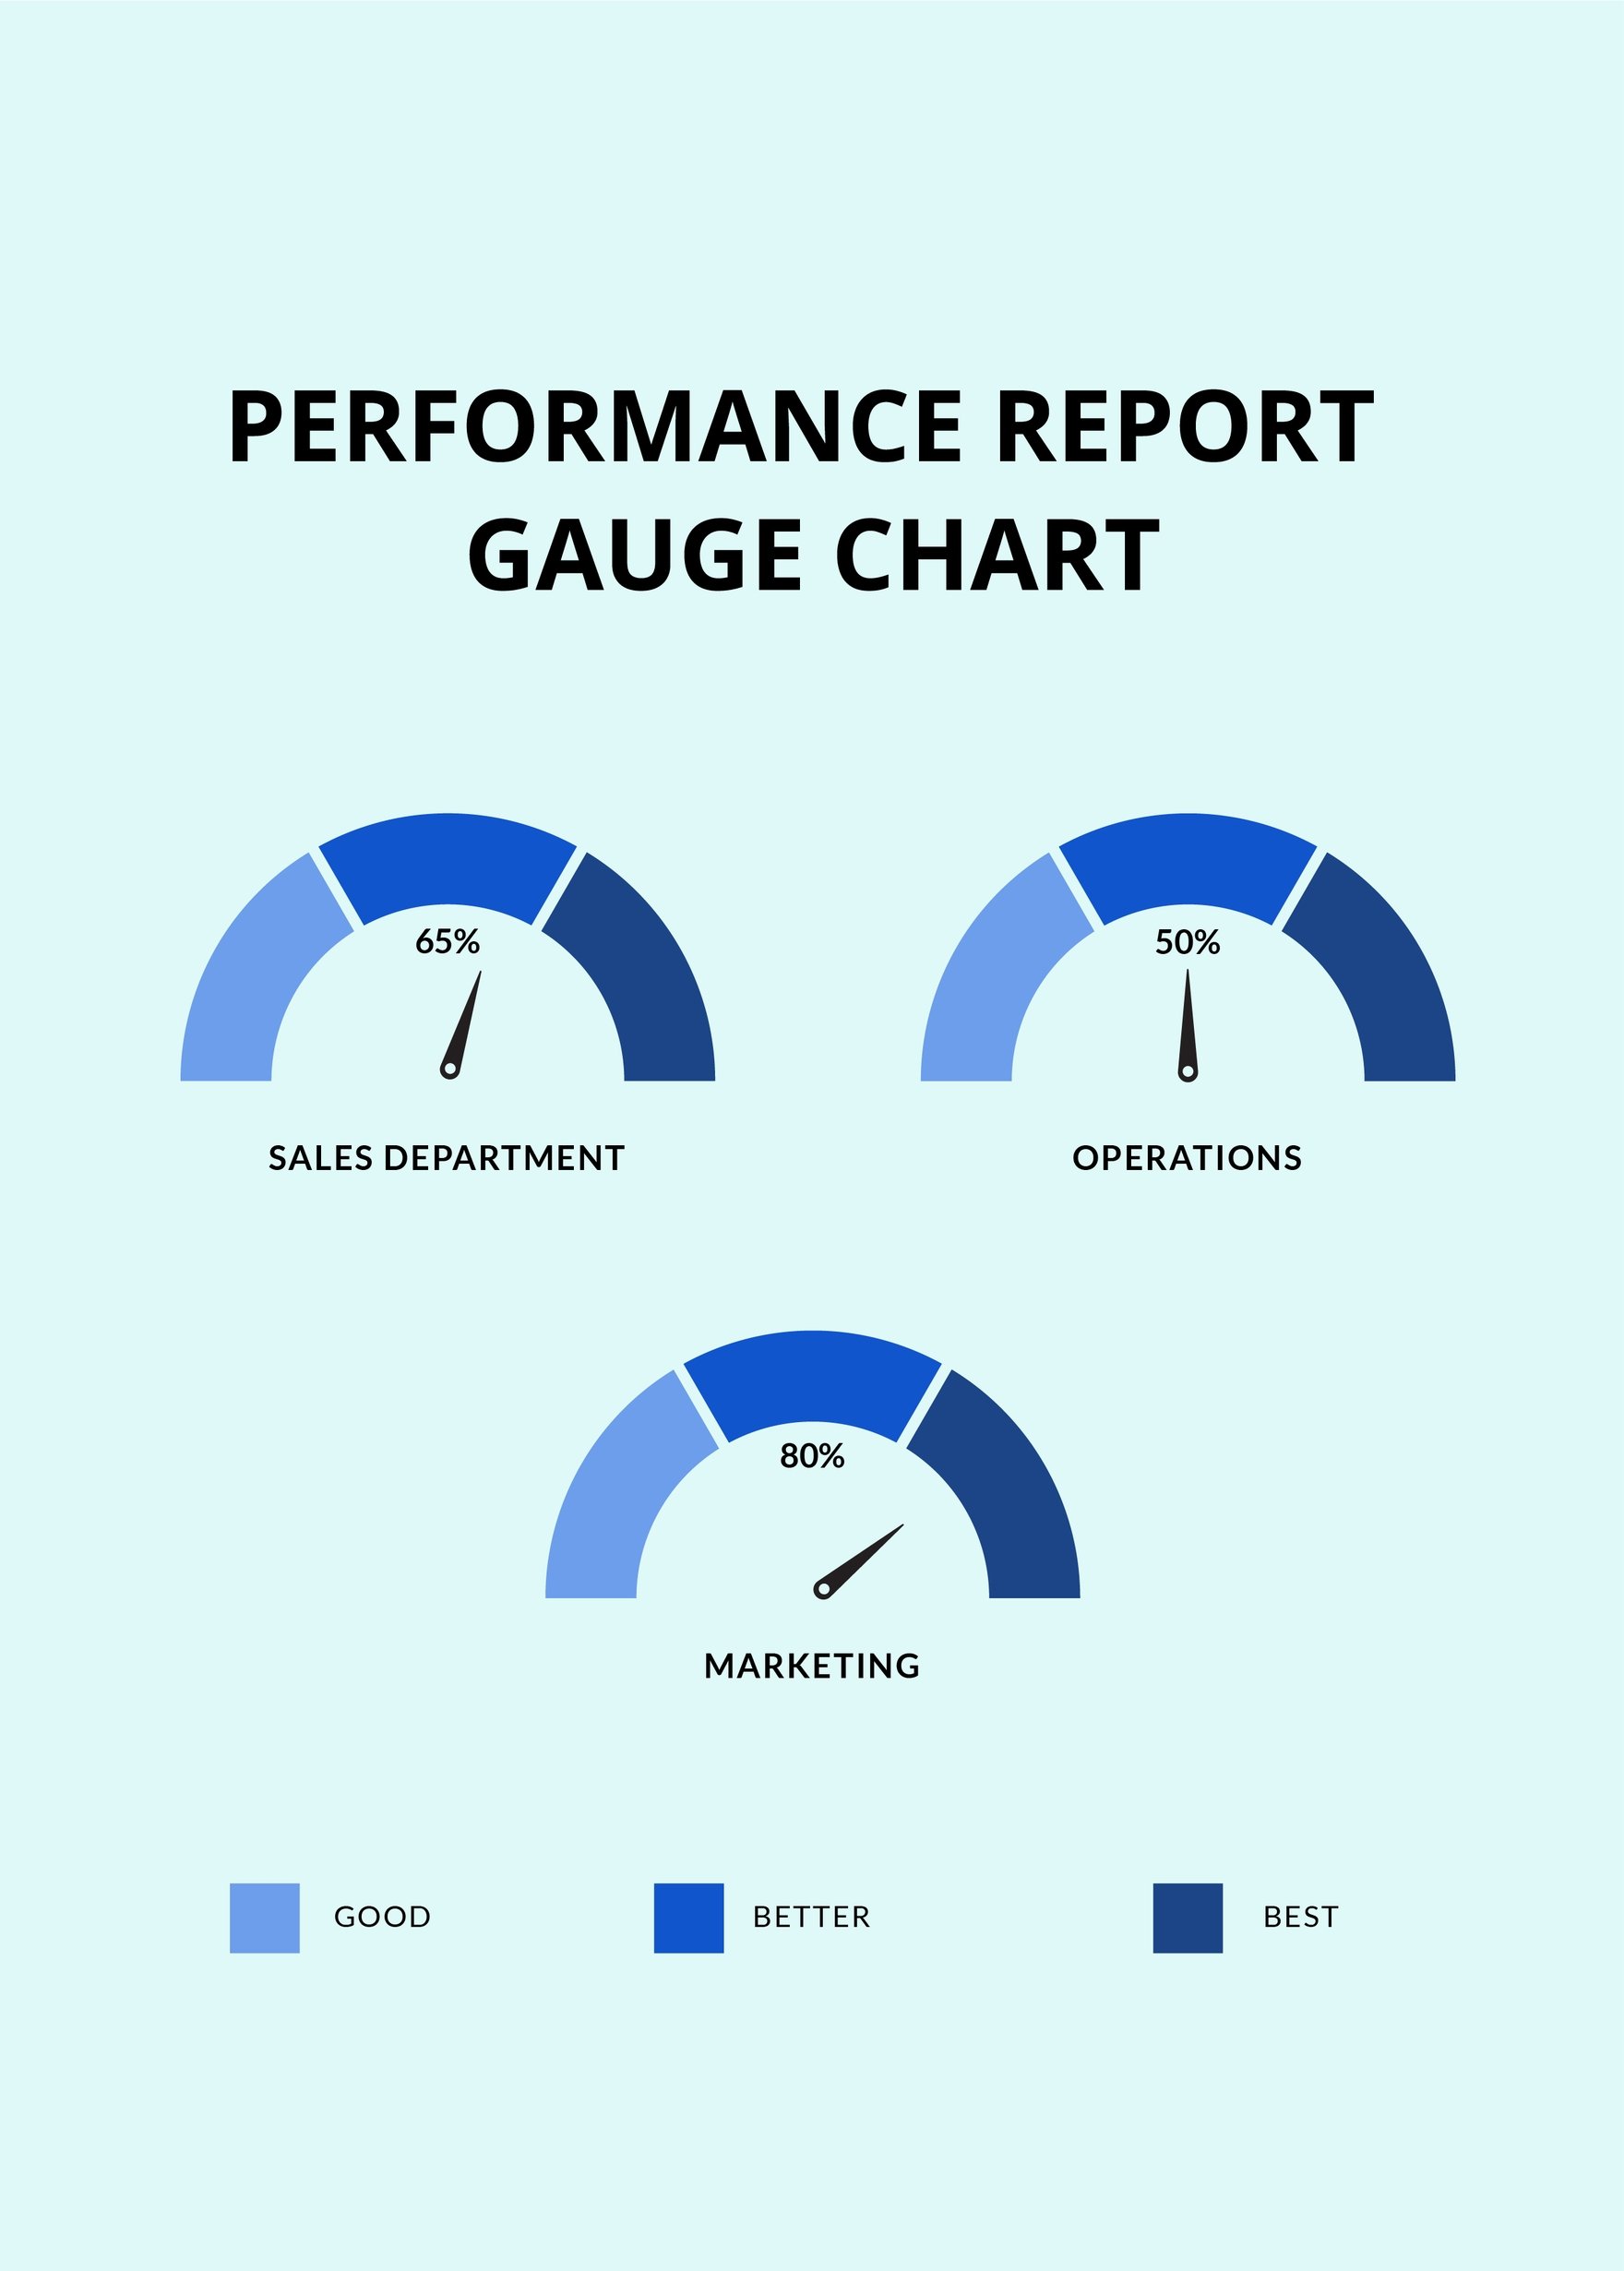 Performance Report Gauge Chart